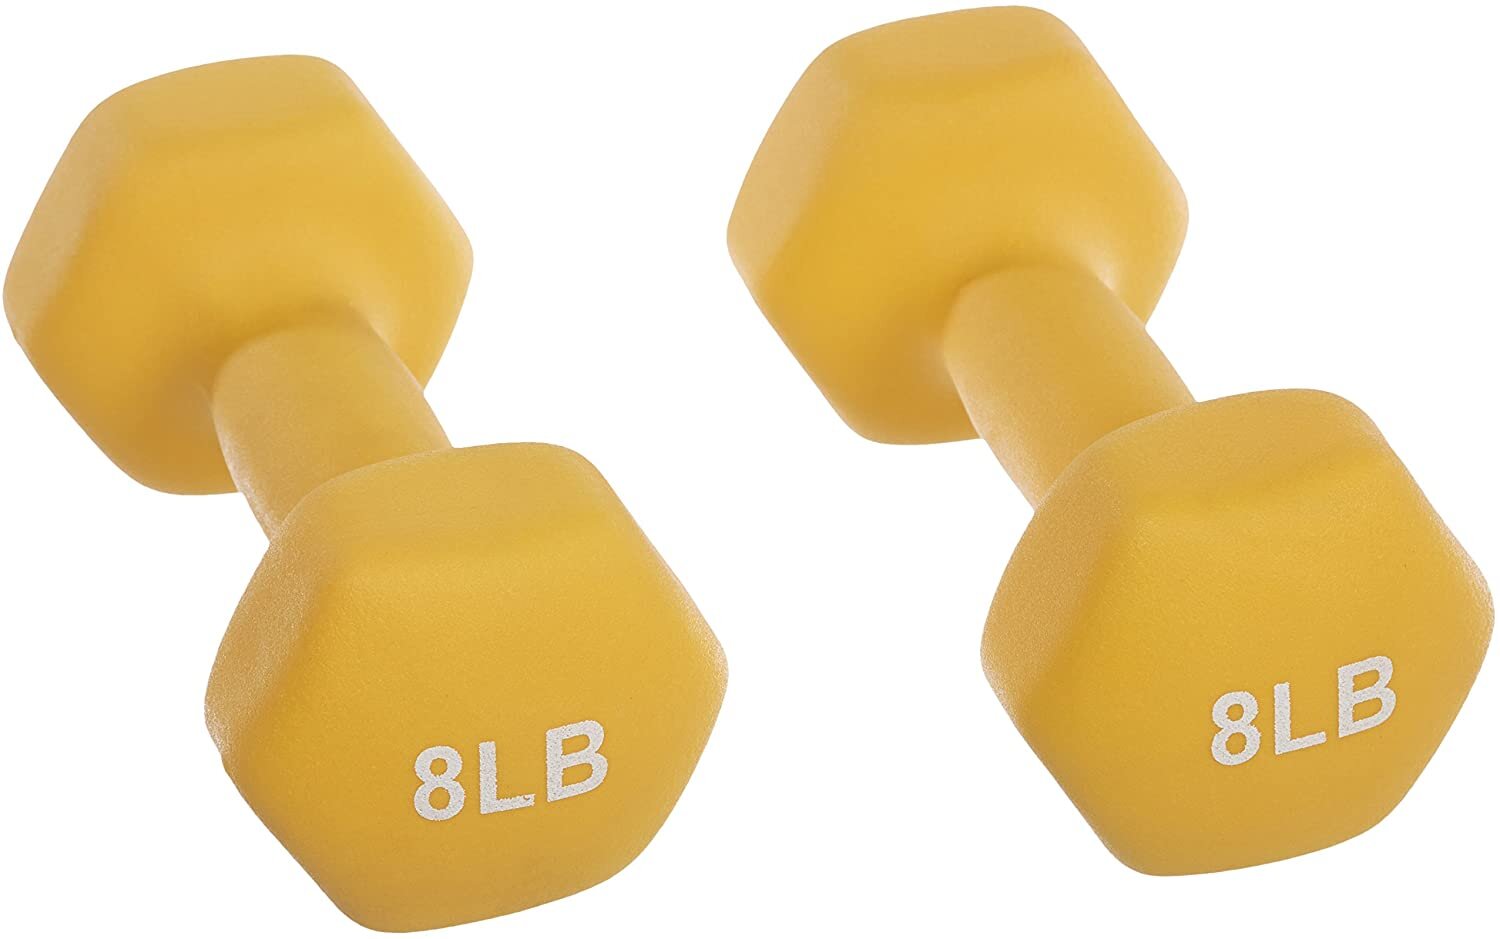 8 lb neoprene hand weights